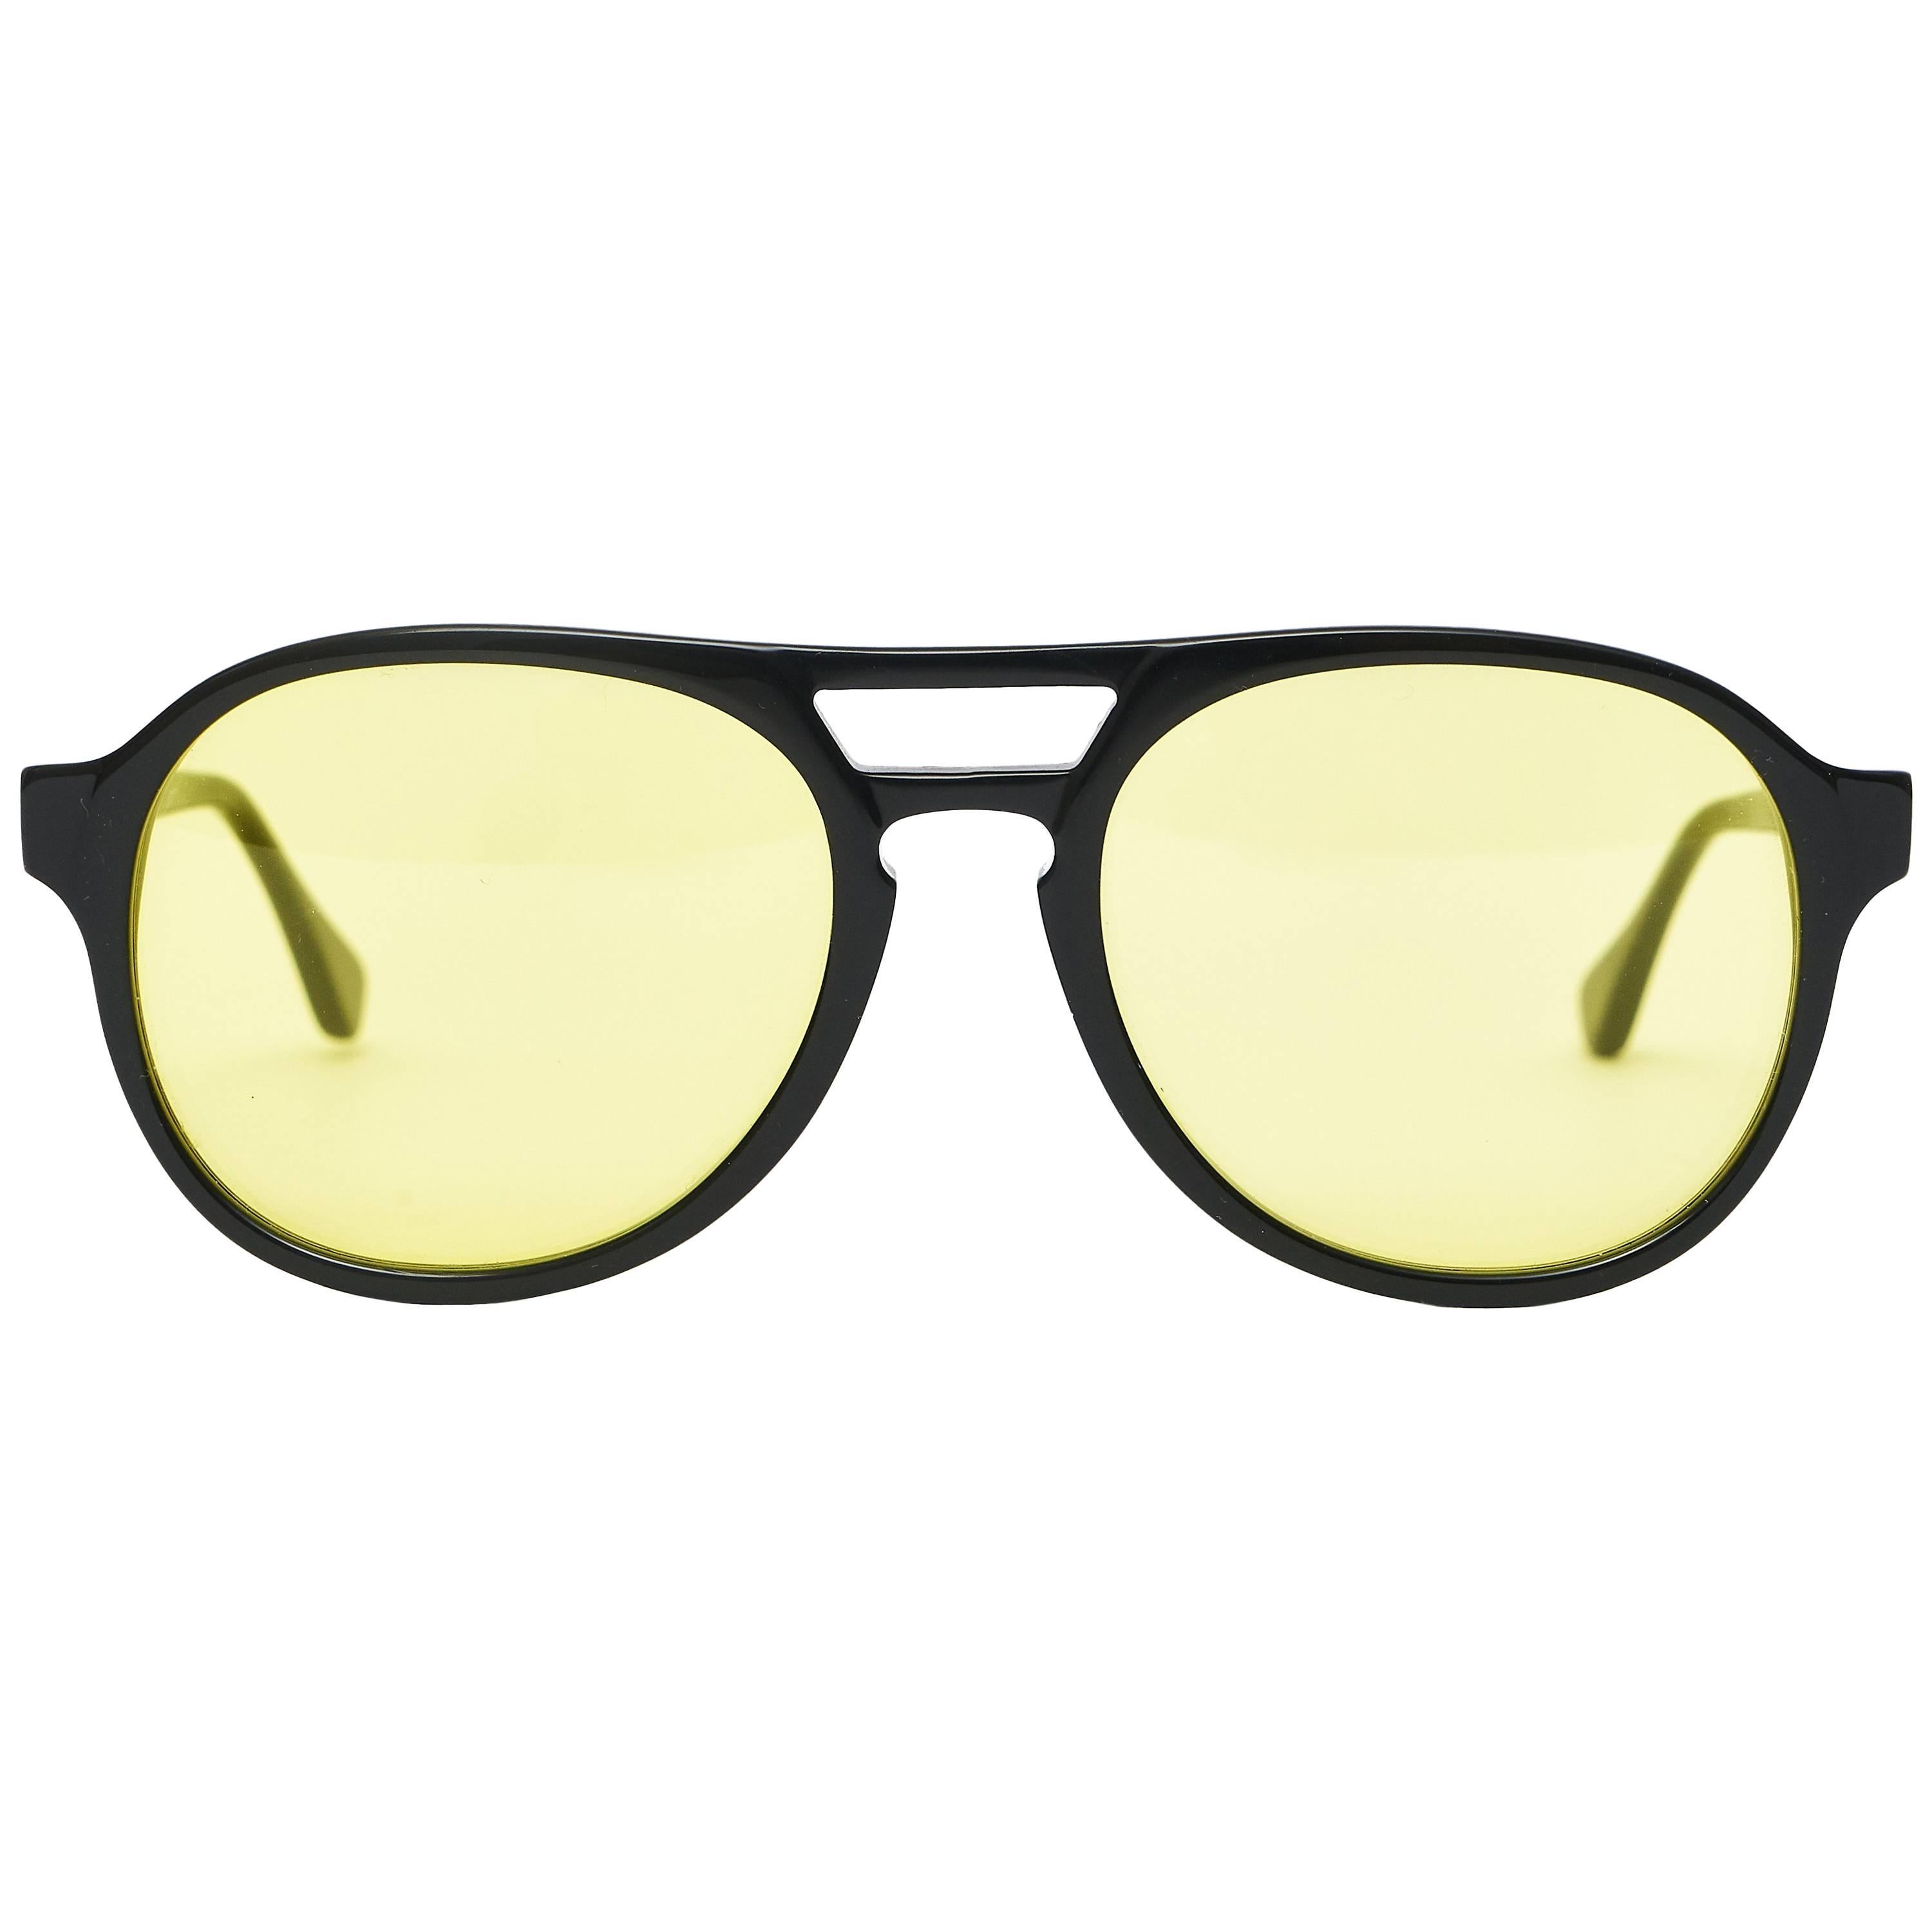 Berenford Cuba Citrus Yellow Sunglasses  For Sale